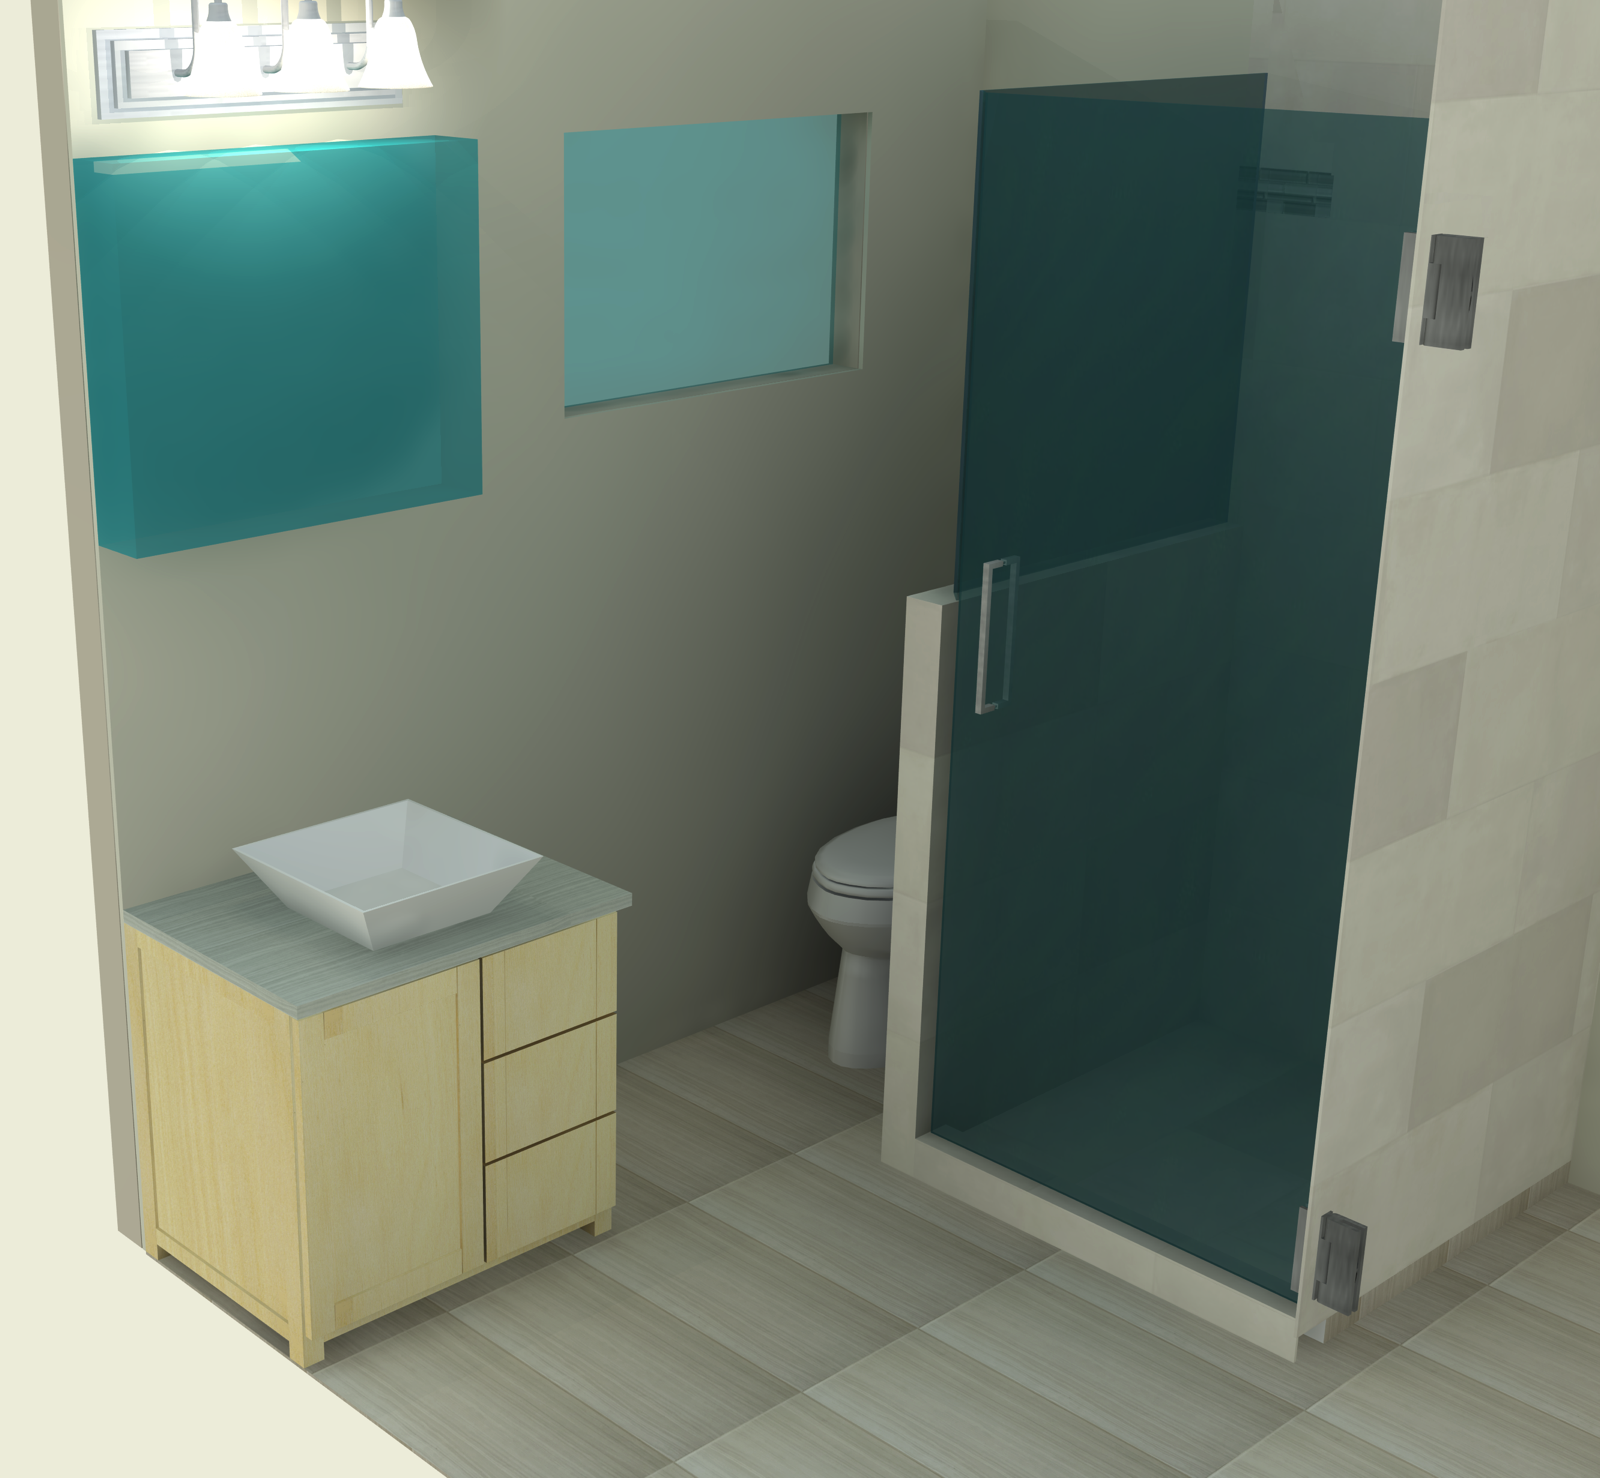 Downstairs bathroom with vanity 2015 06 22 20115400000